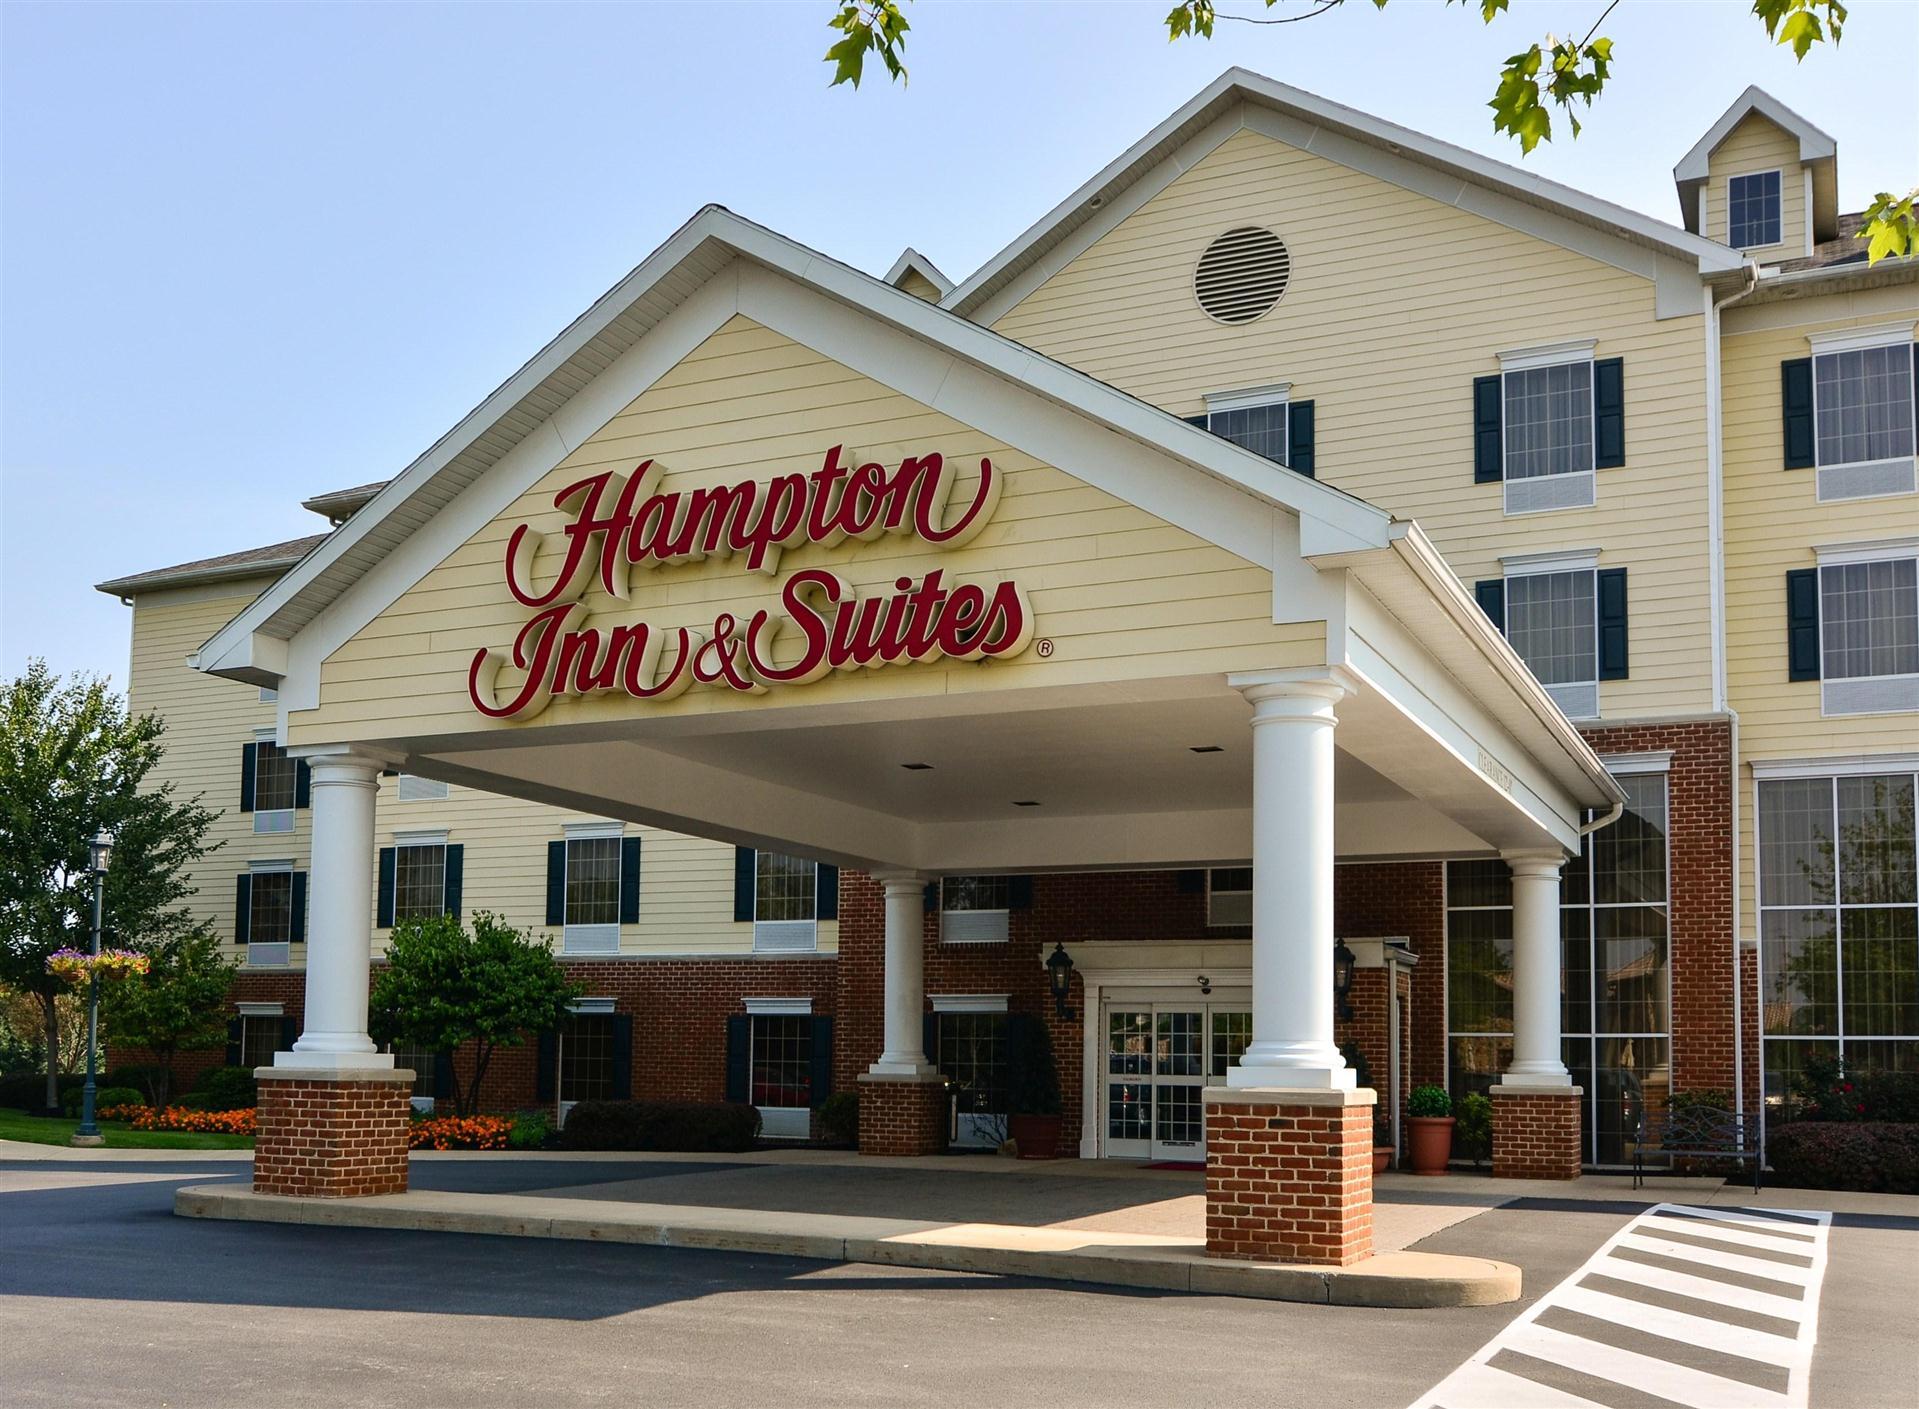 Hampton Inn & Suites State College at Williamsburg Square in State College, PA